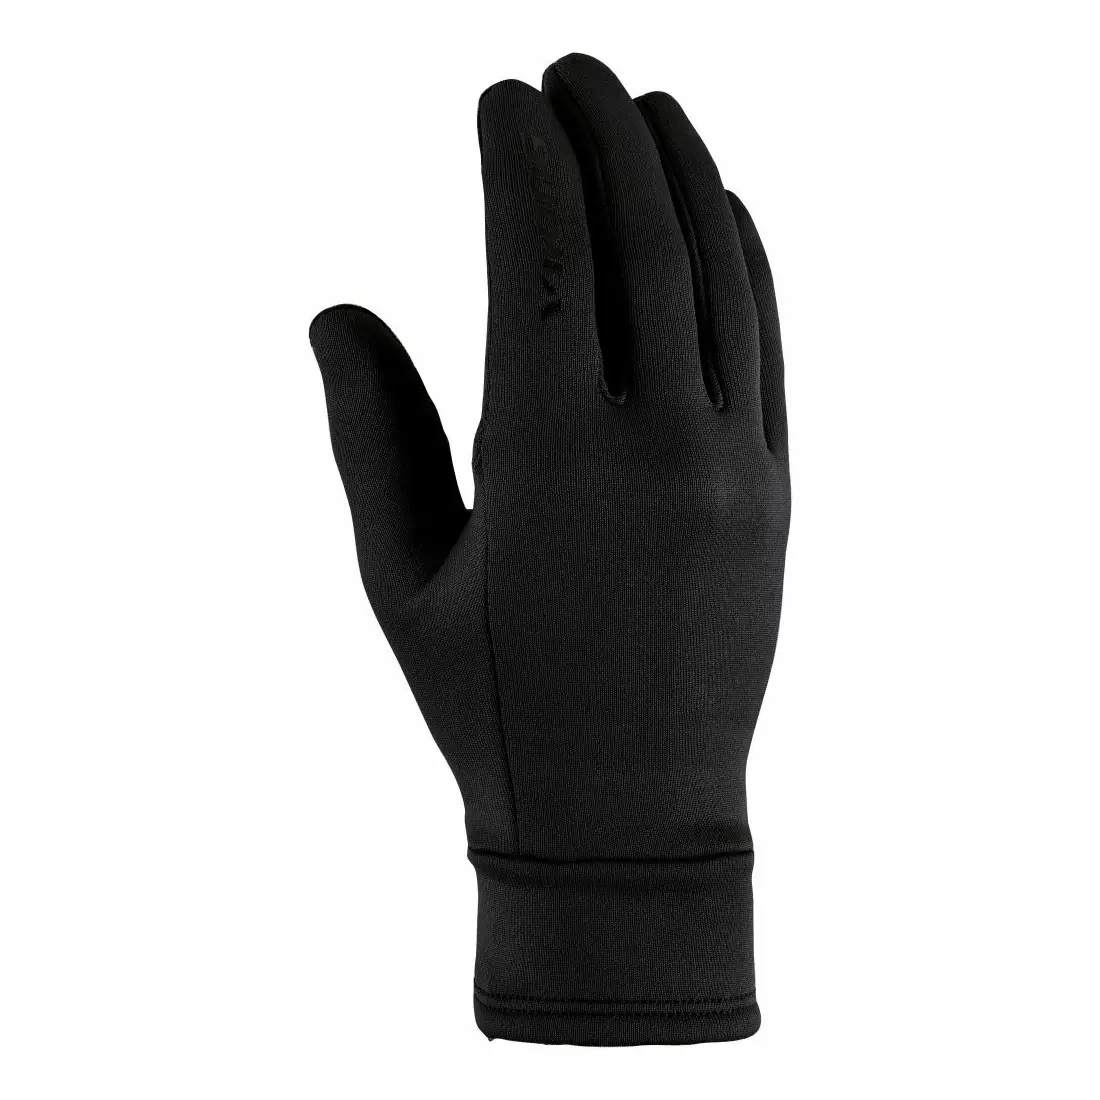 VIKING winter gloves Nepal 2 Polartec Power Stretch 140/23/7661/09